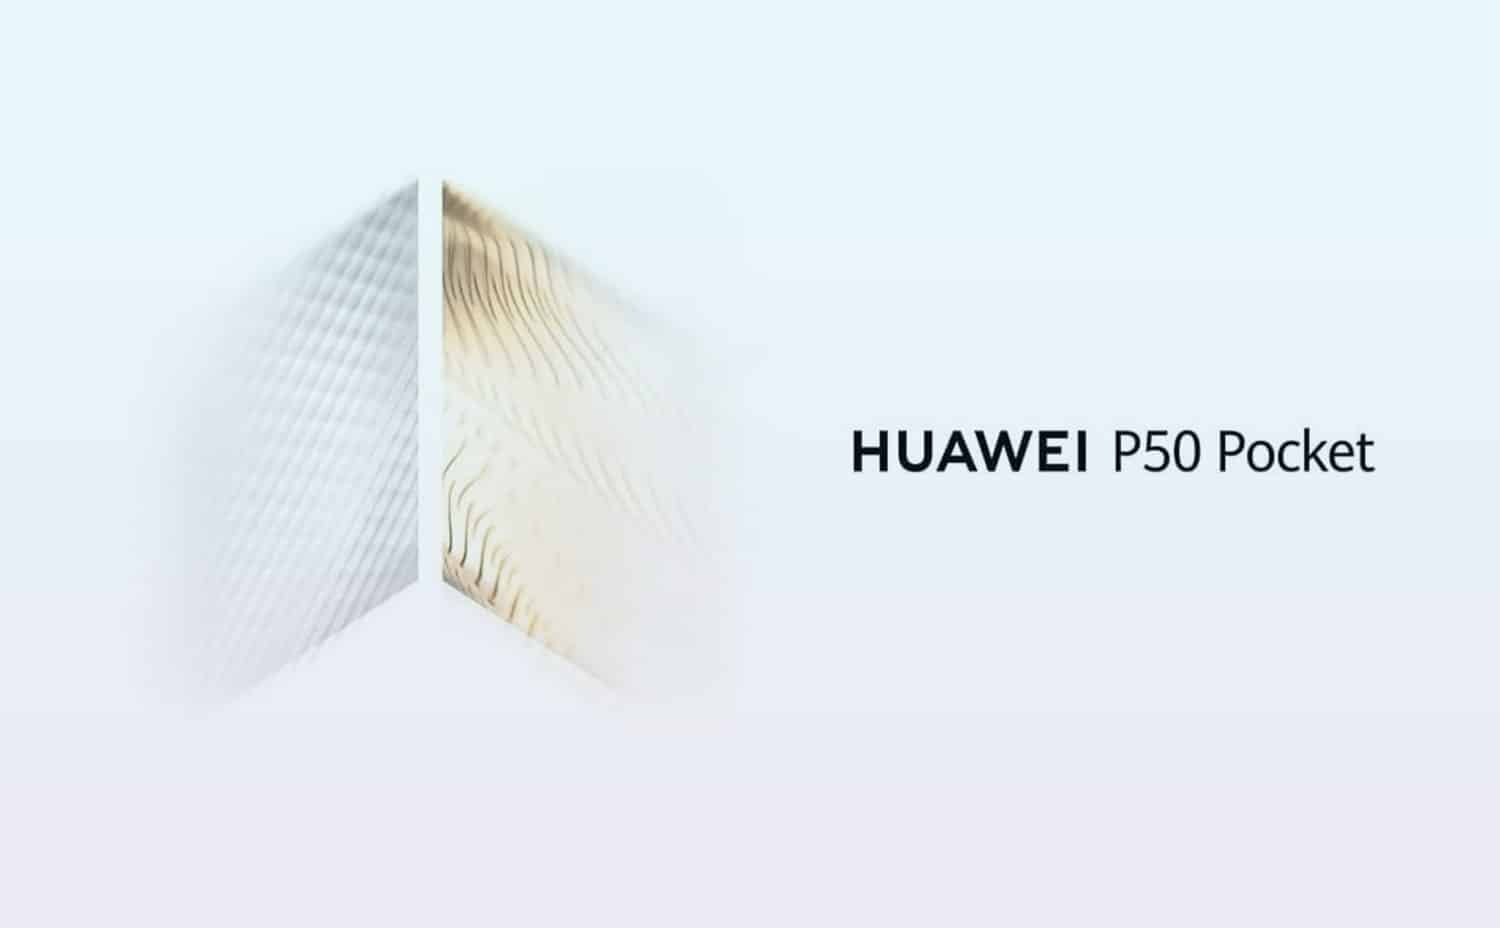 كل ماتريد معرفته عن هاتف هواوي بي 50 بوكيت Huawei P50 Pocket